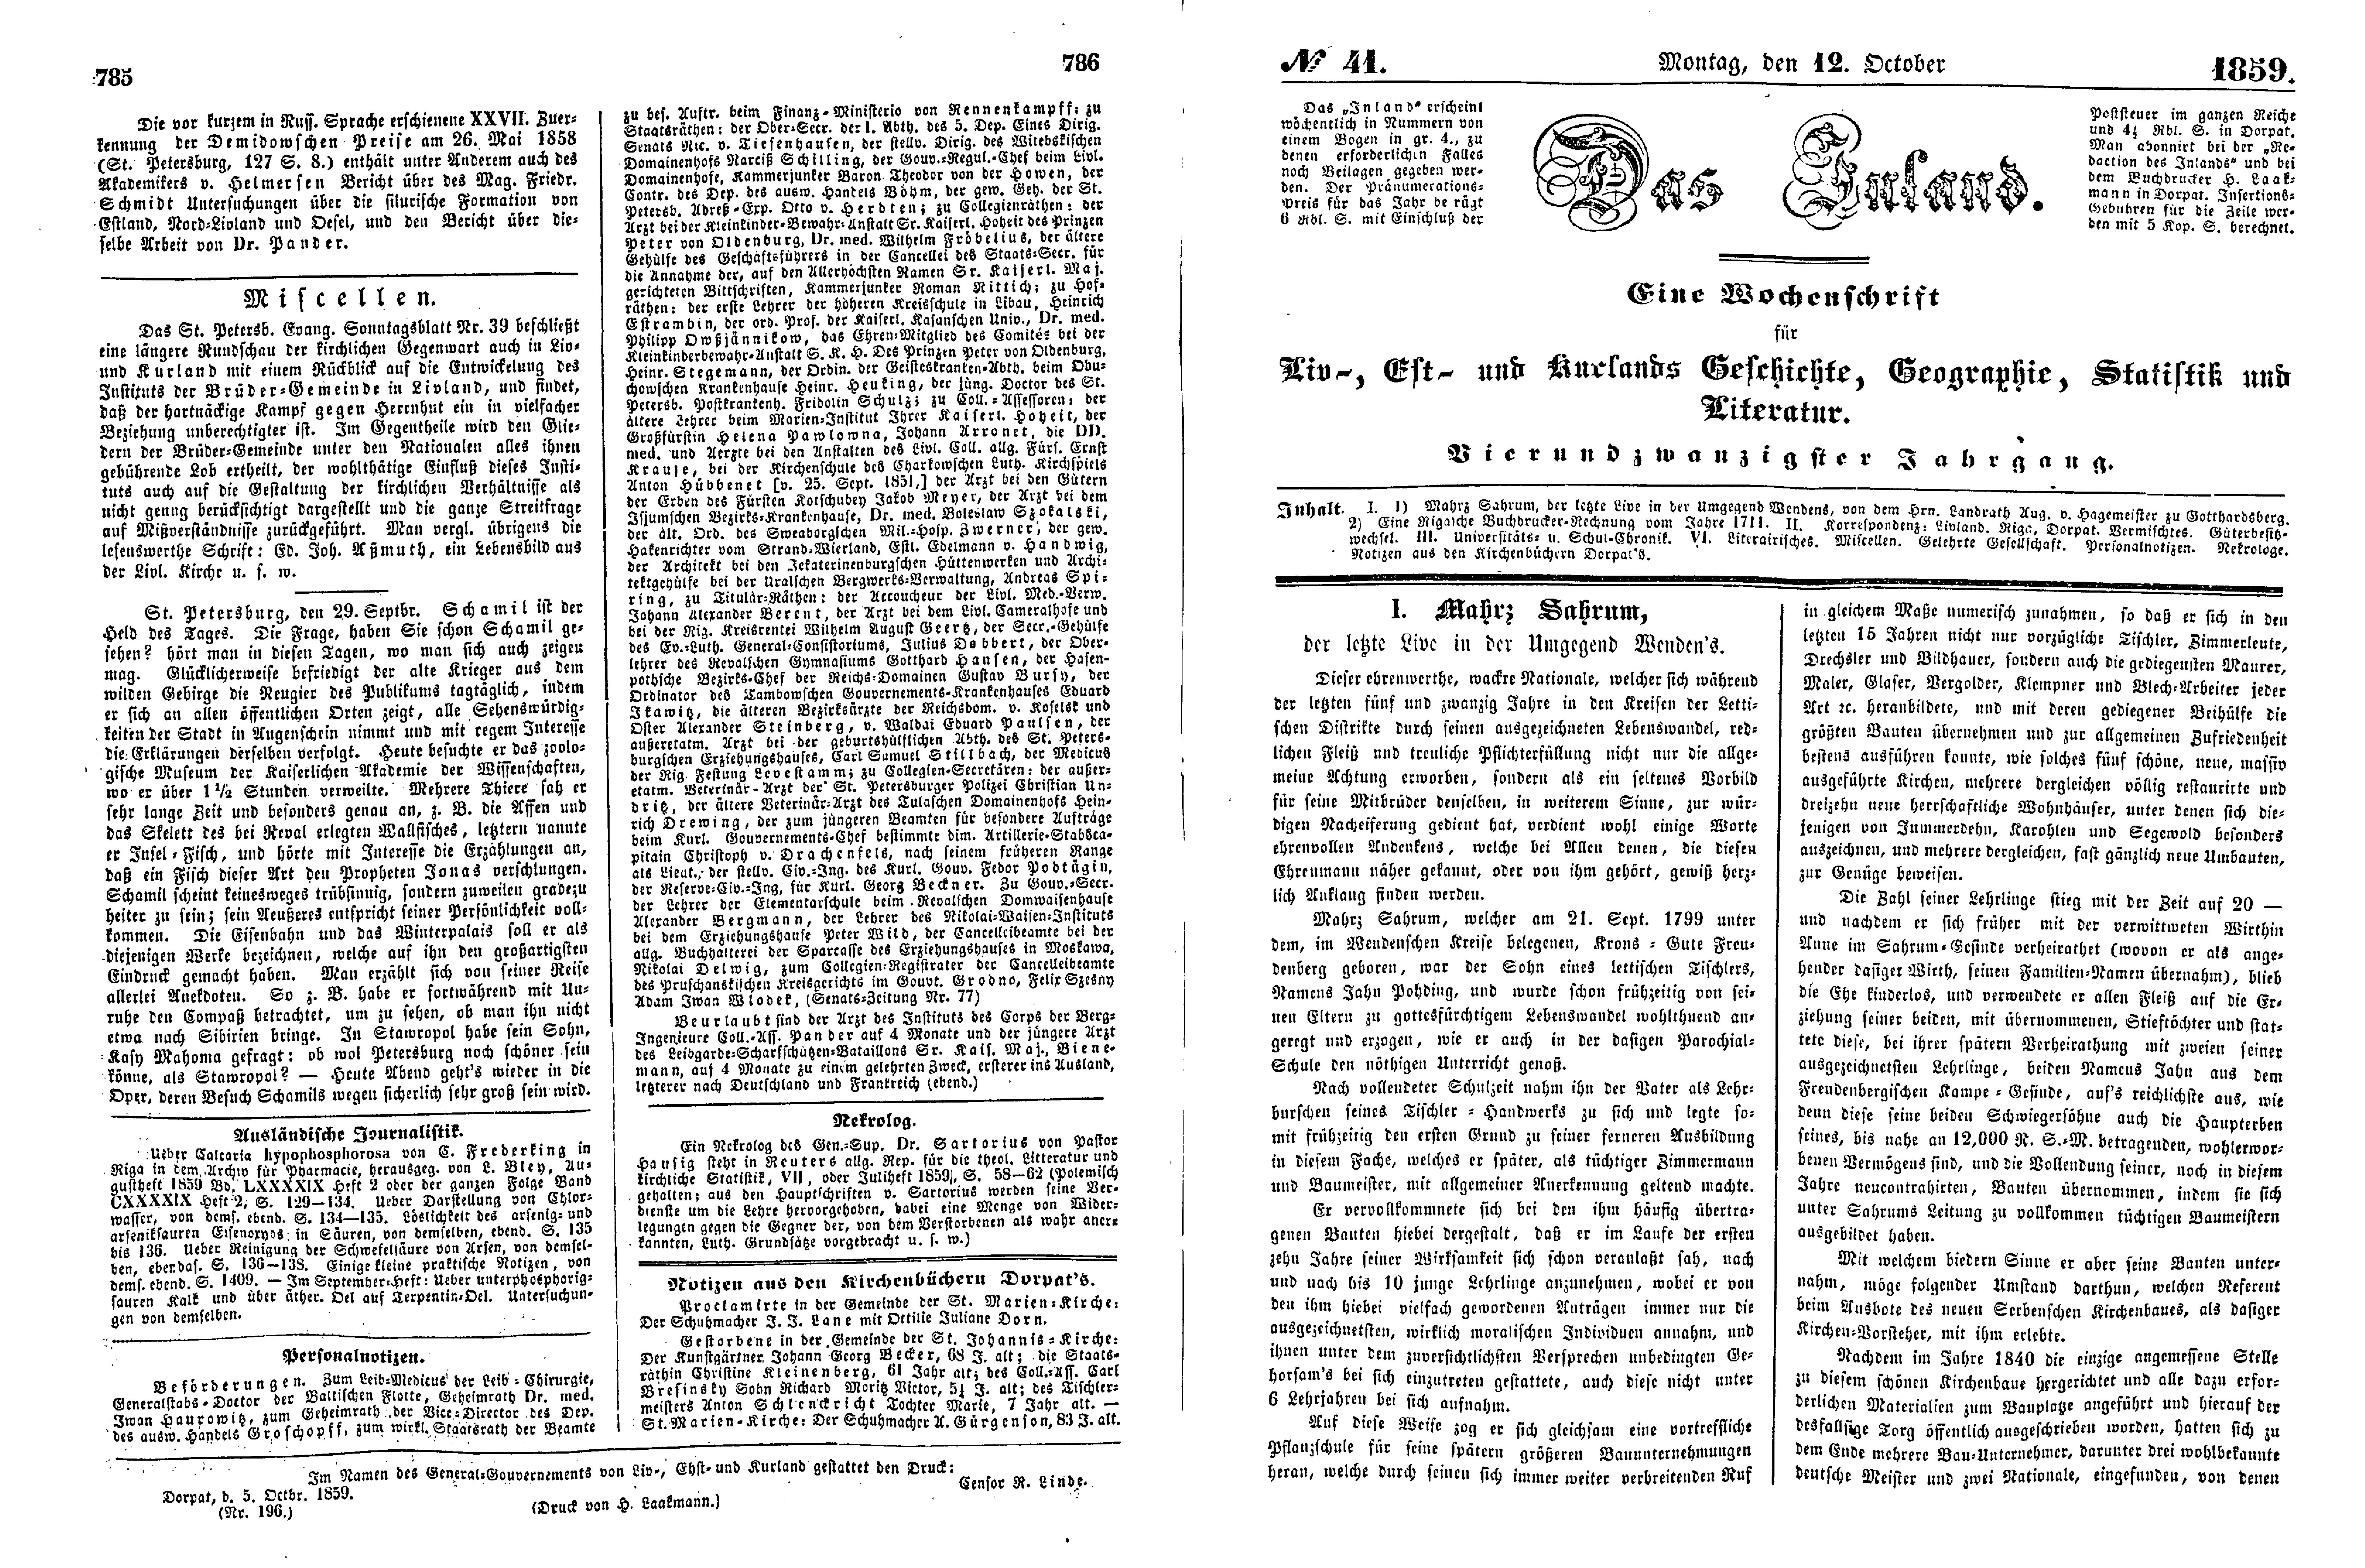 Mahrs Sahrum, der letzte Live in der Umgegend Wenden's (1859) | 1. (785-788) Основной текст